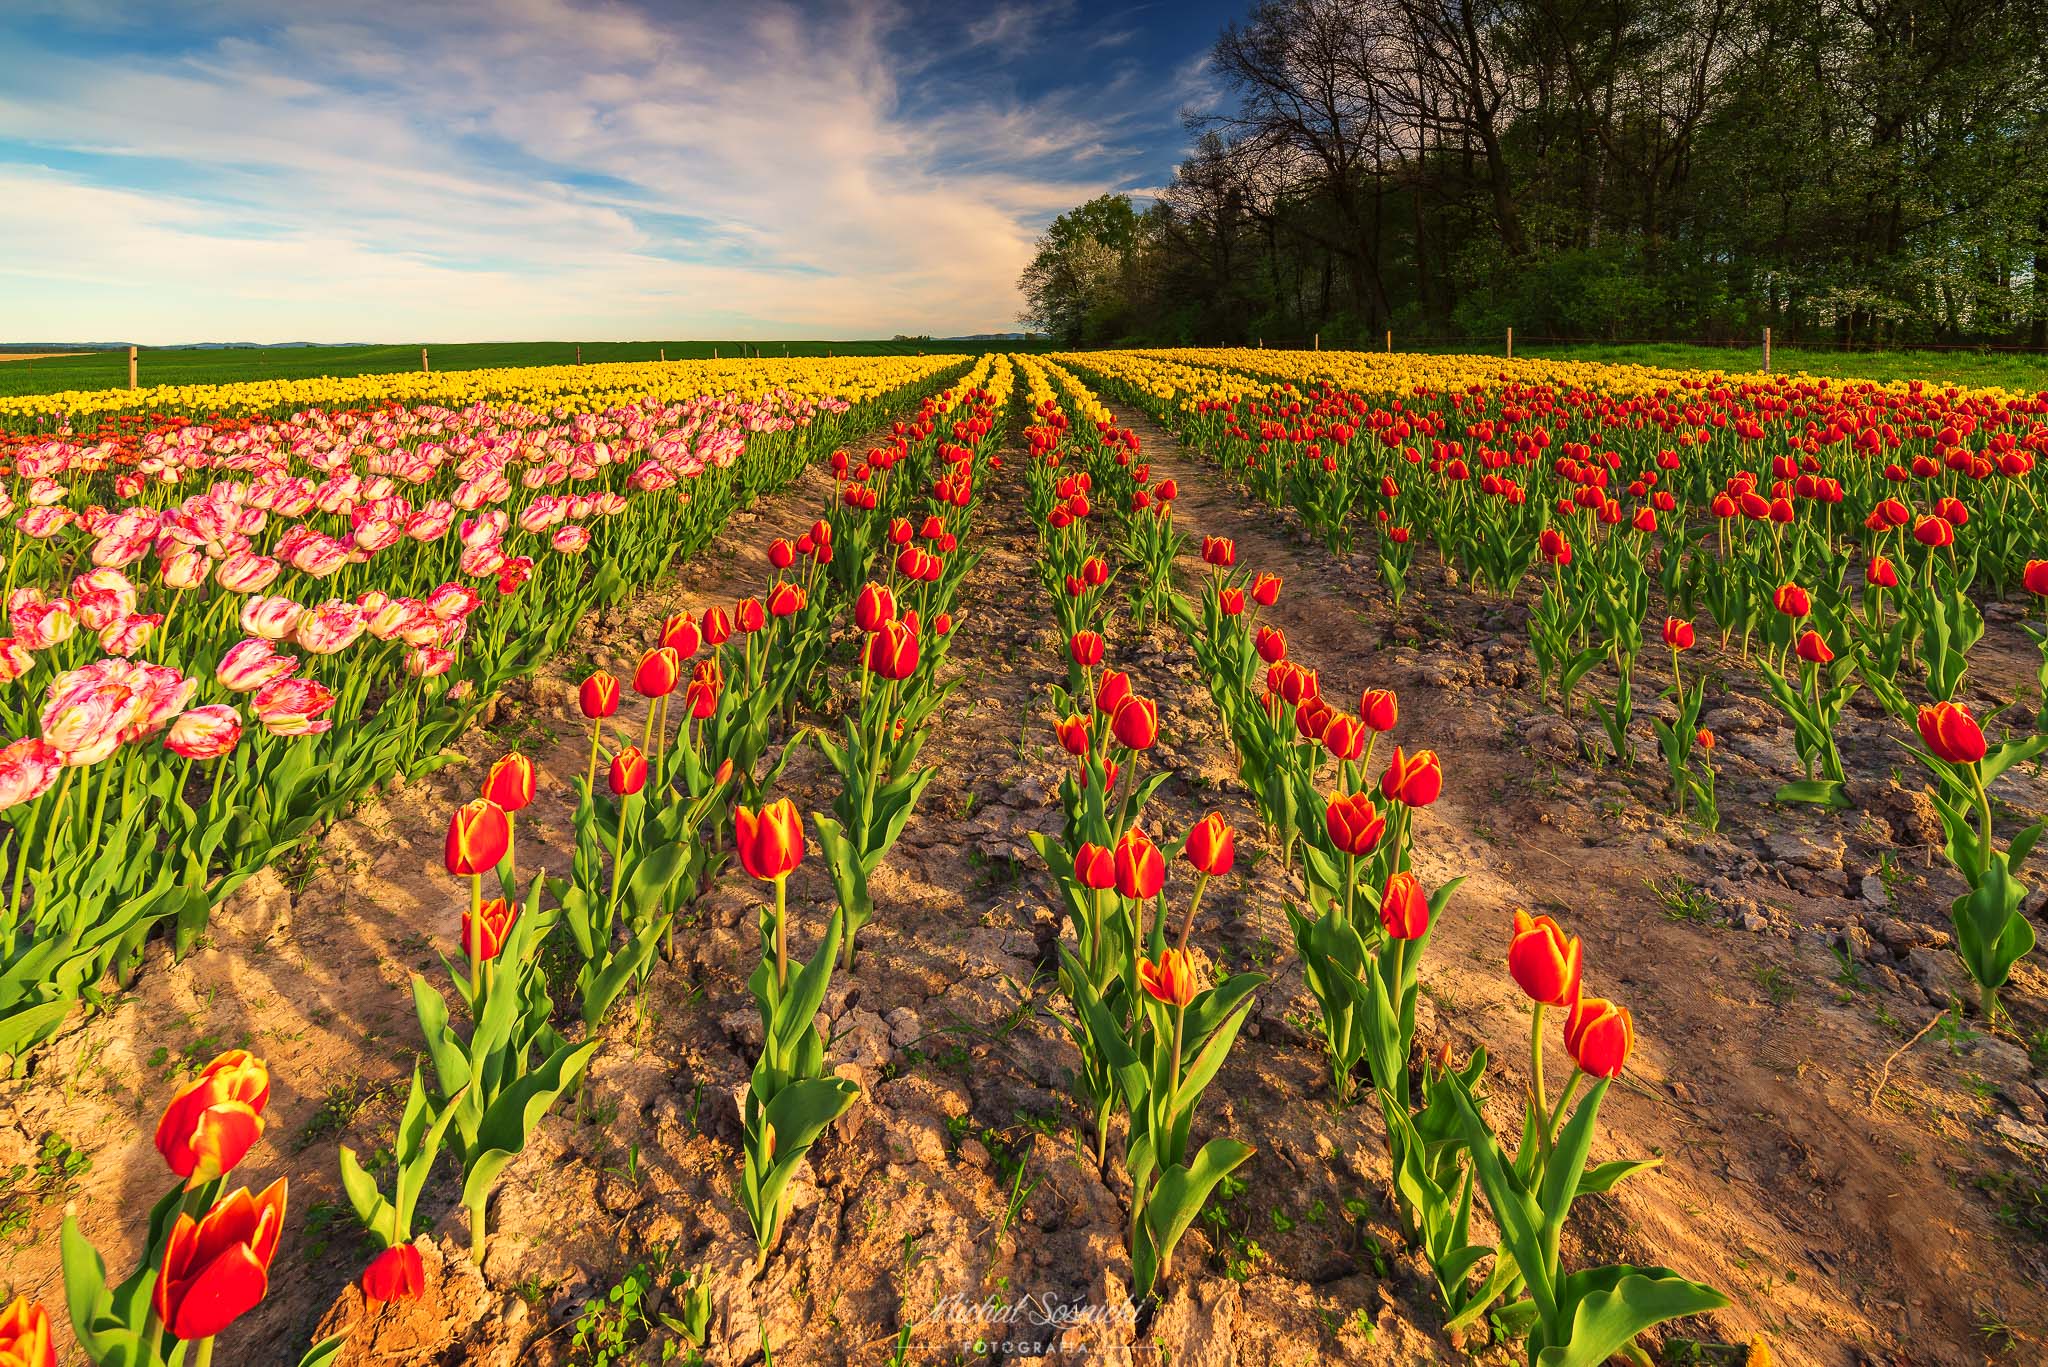 #poland #tulip #tulips #flowers #nature #landscape #best #benro #benq #pentax, Michał Sośnicki